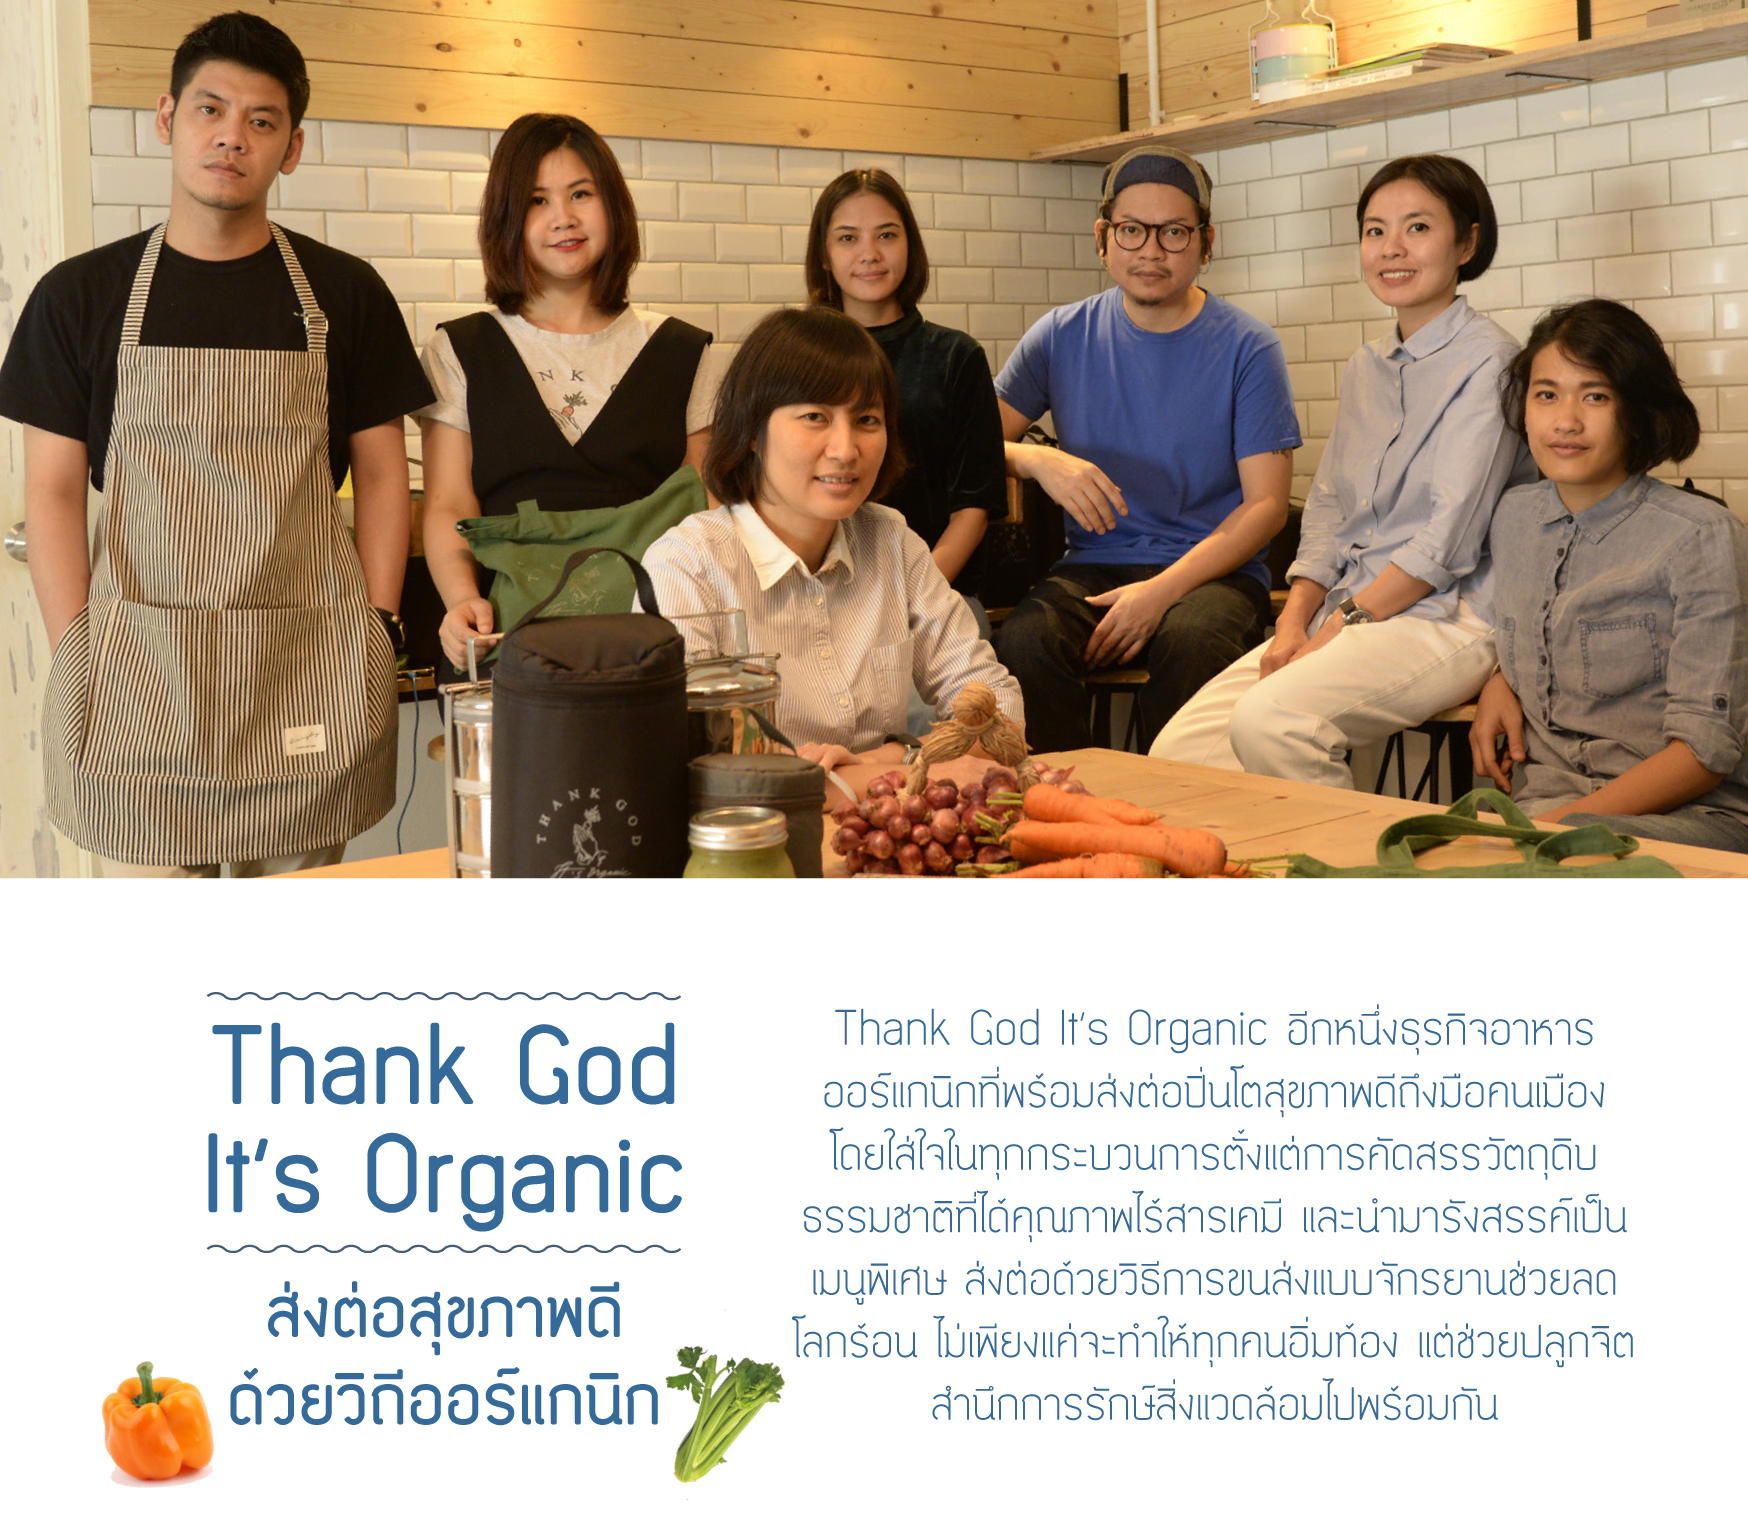 Thank God It’s Organic | ส่งต่อสุขภาพดี ด้วยวิถีออร์แกนิก